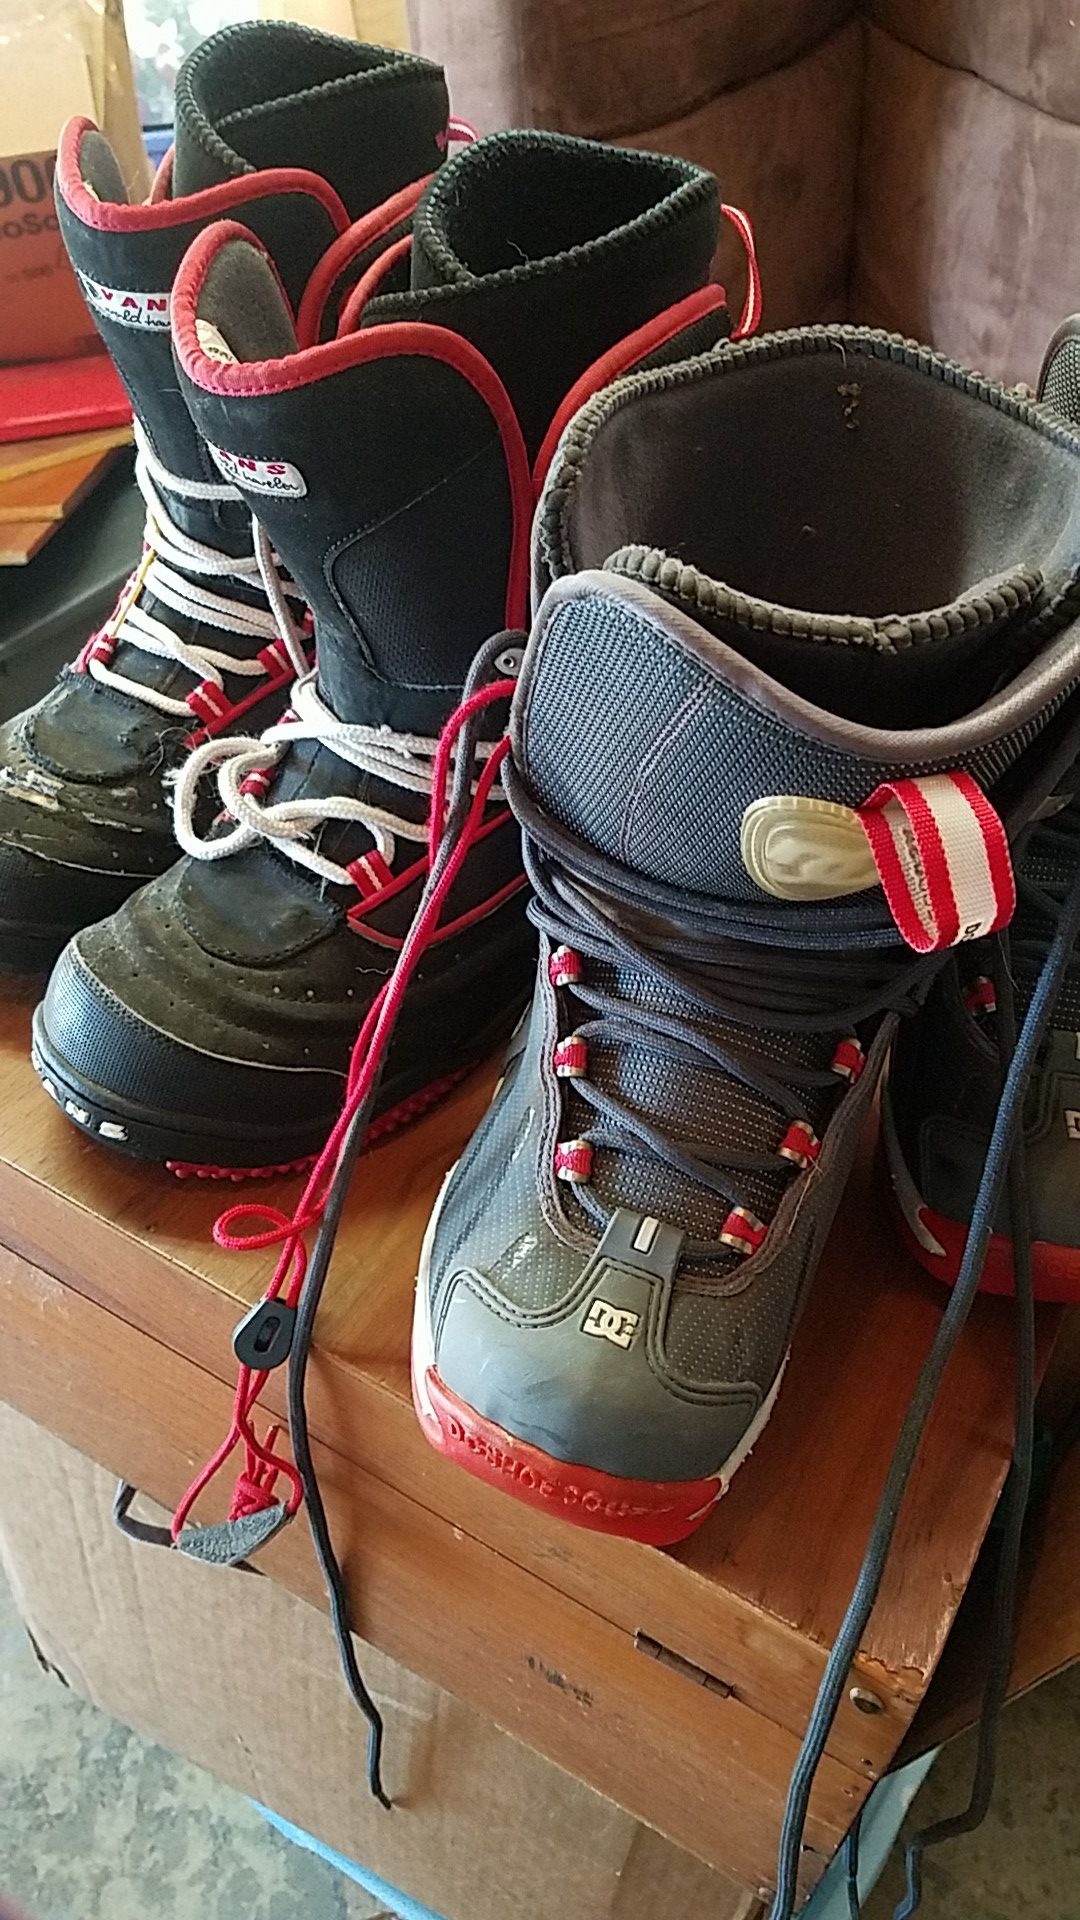 Men's snowboard boots